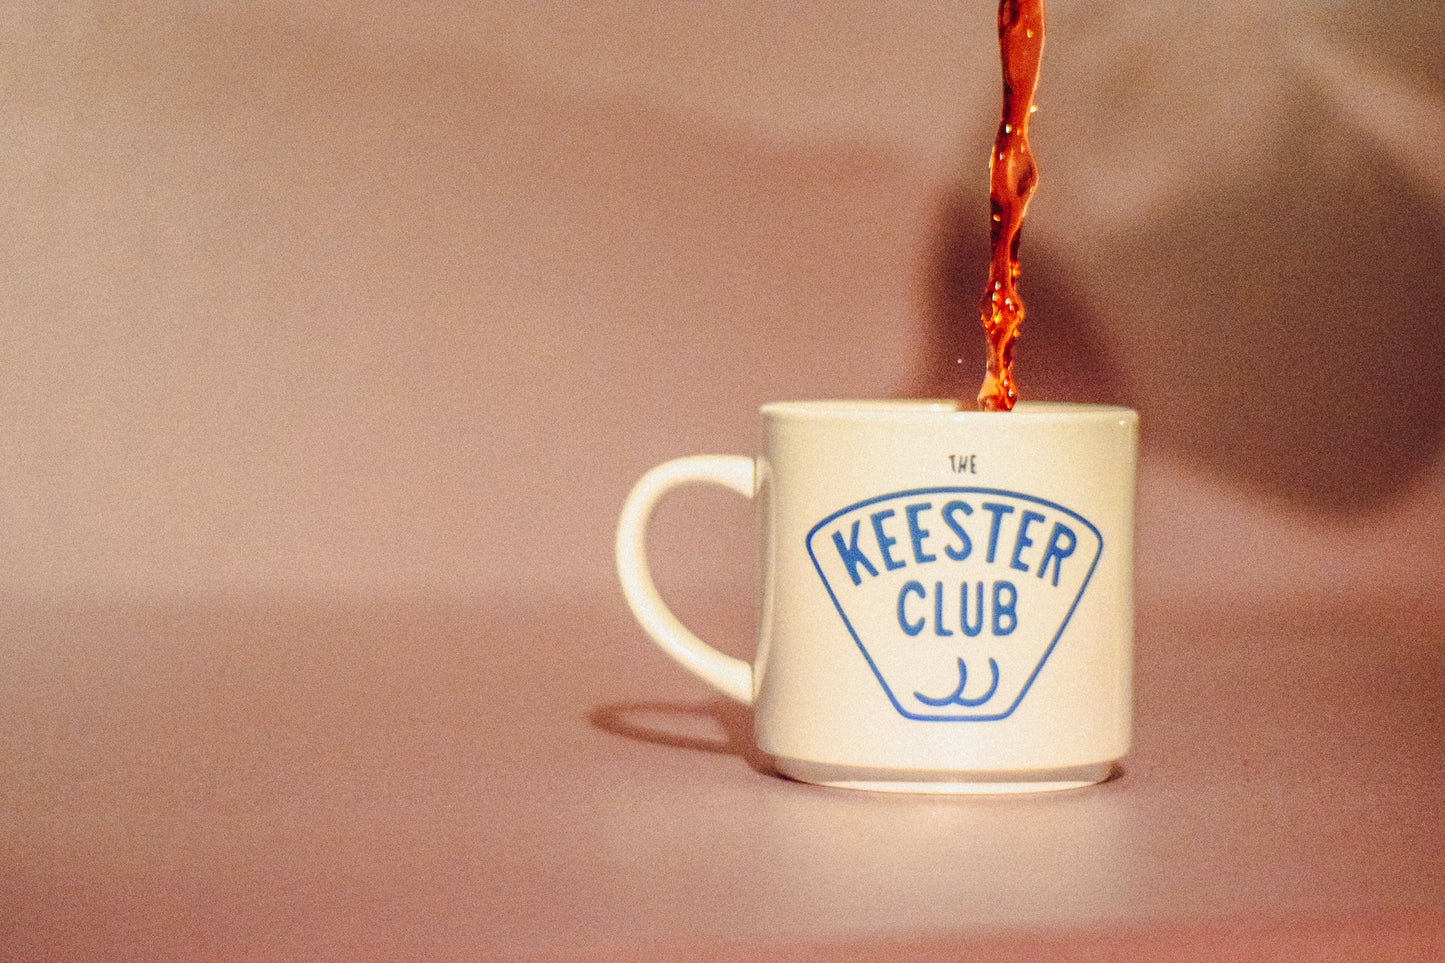 The Keester Club Annual Membership - Best Buttie Membership